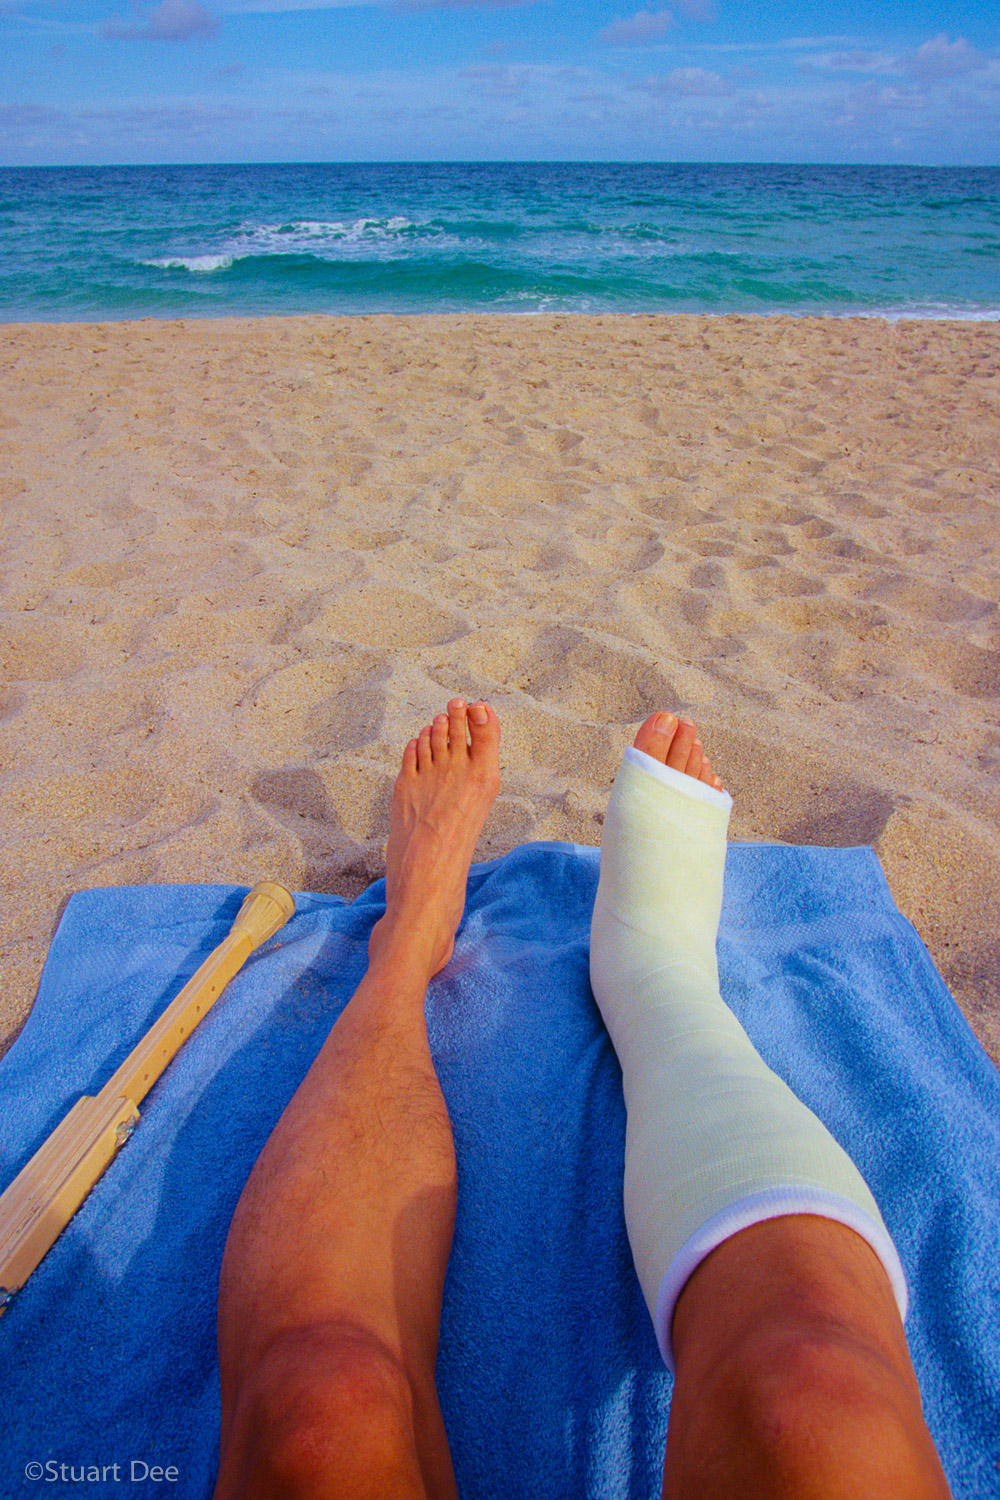  Man's legs and crutch on beach towel, Miami Beach, Florida, USA 